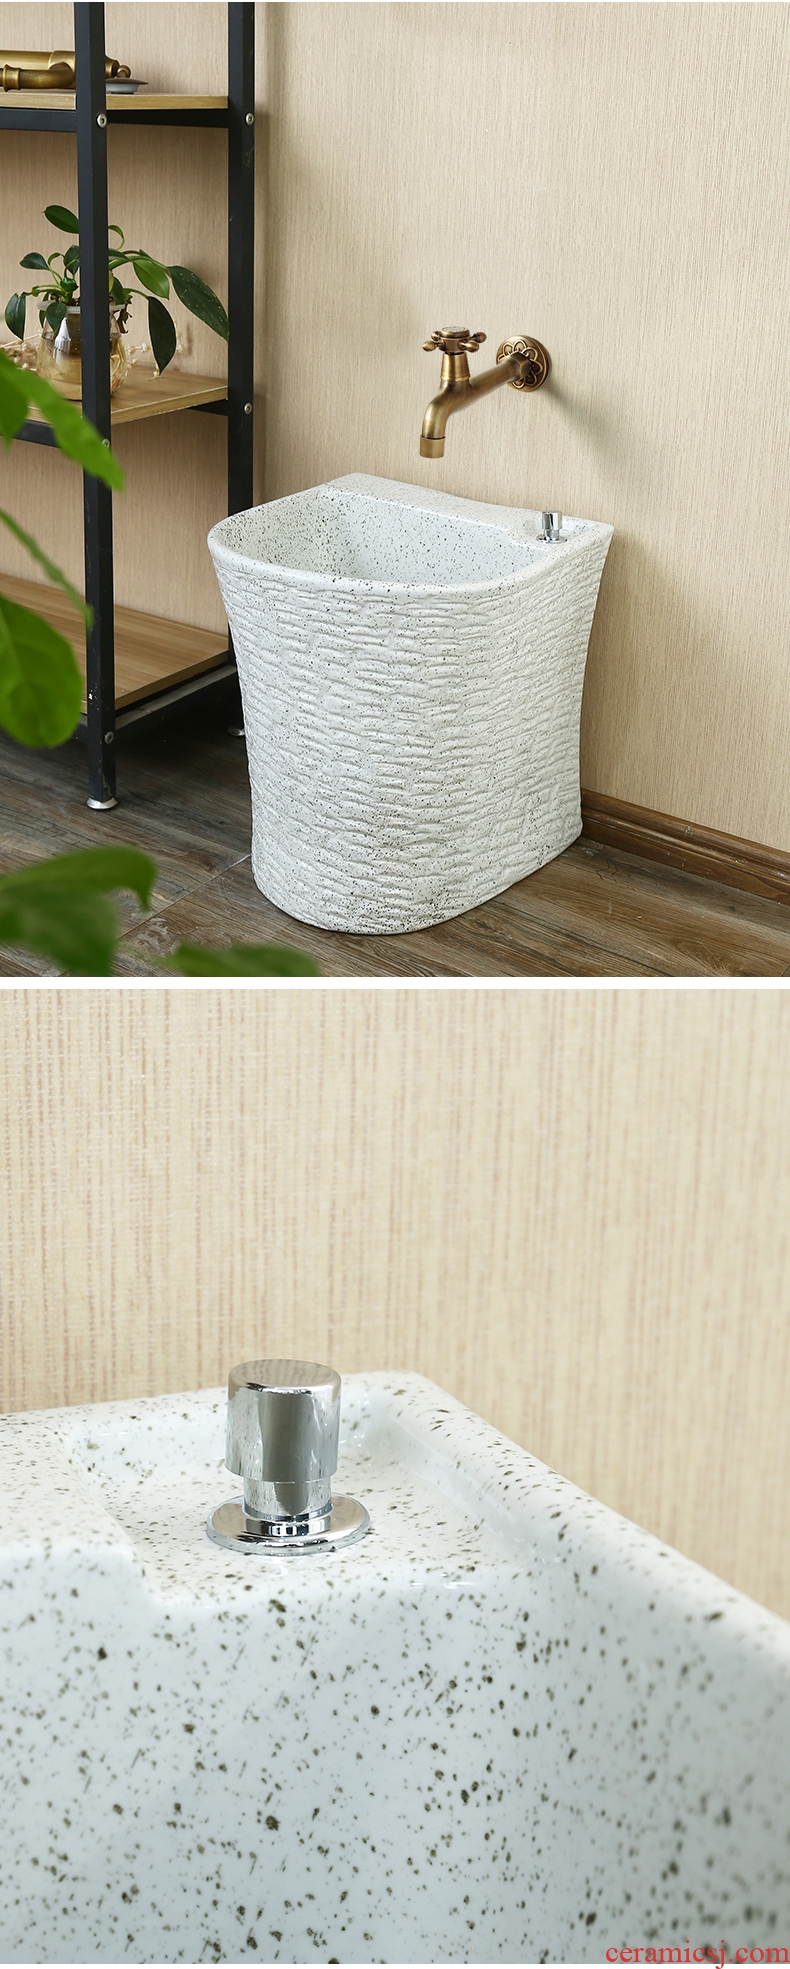 Post, neat new Chinese style ceramic lavabo floor balcony column basin of pillar type lavatory toilet